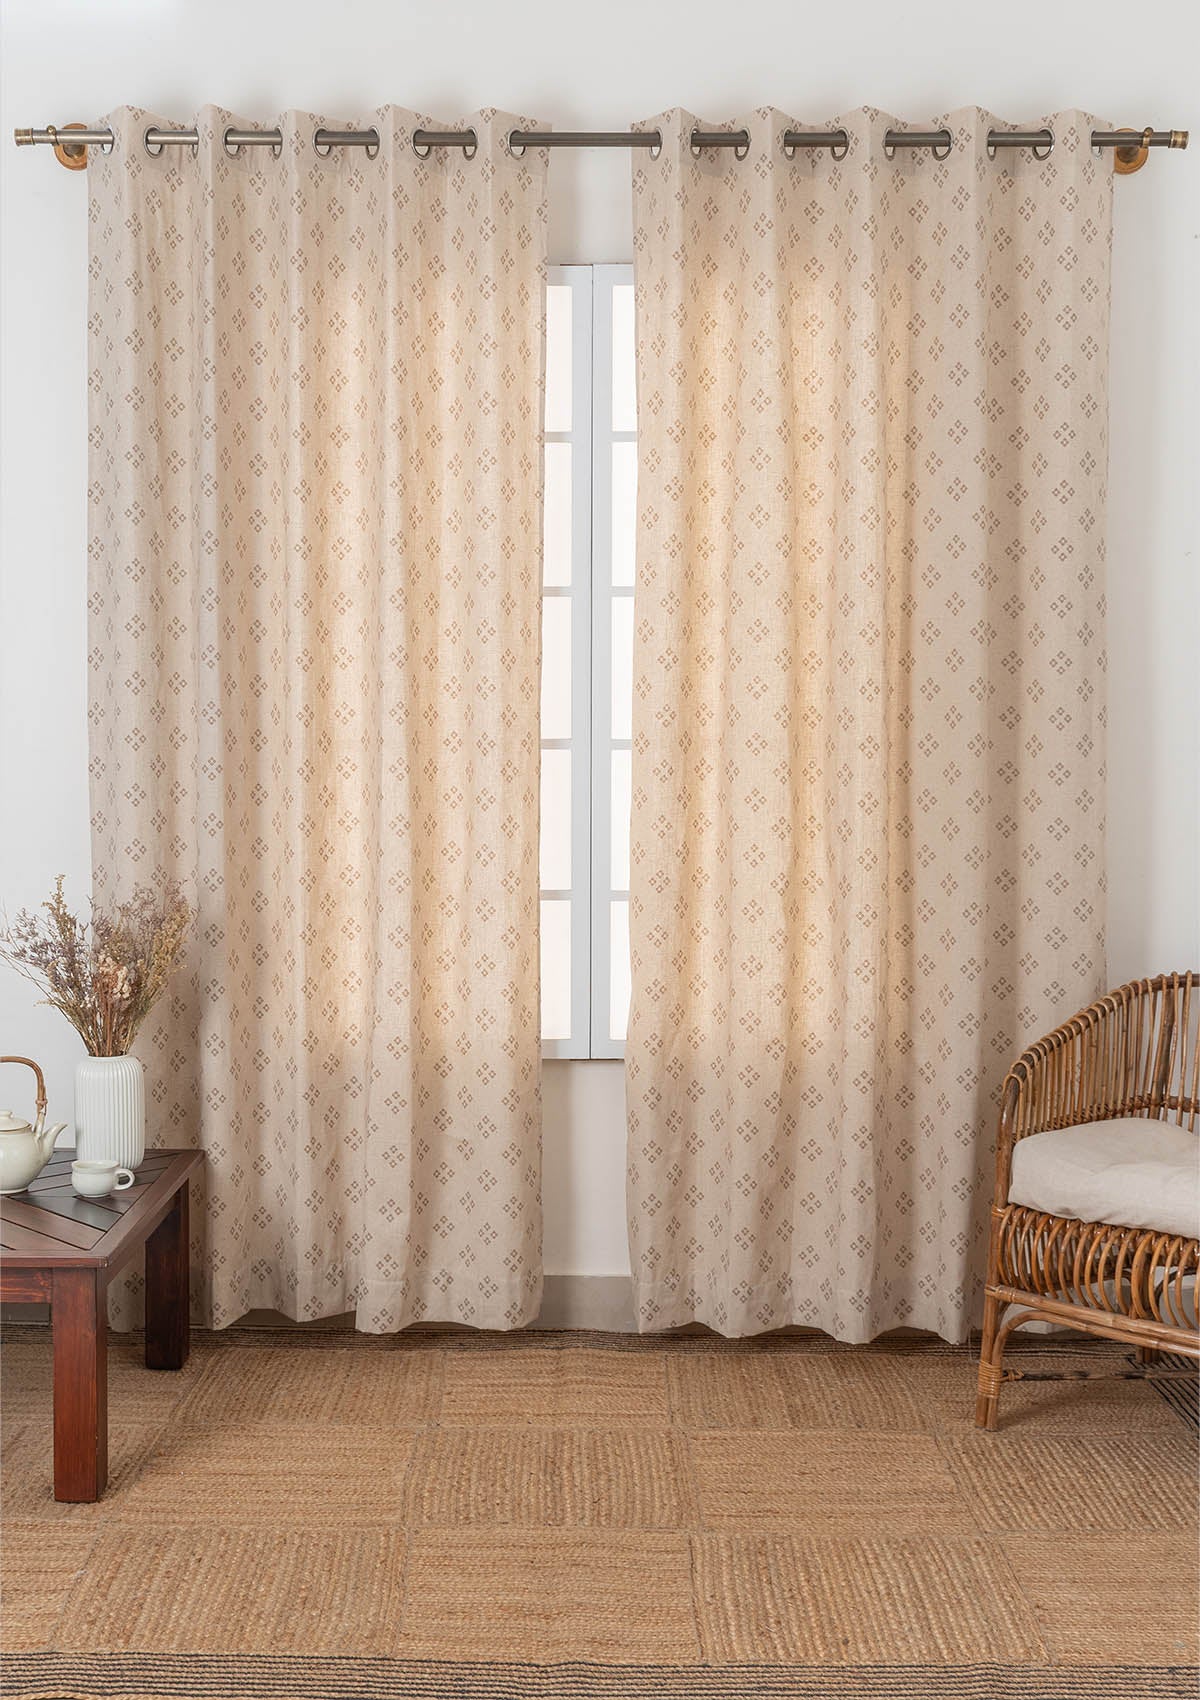 Harvest linen cotton minimal design curtan for living room - Room darkeing - Brown